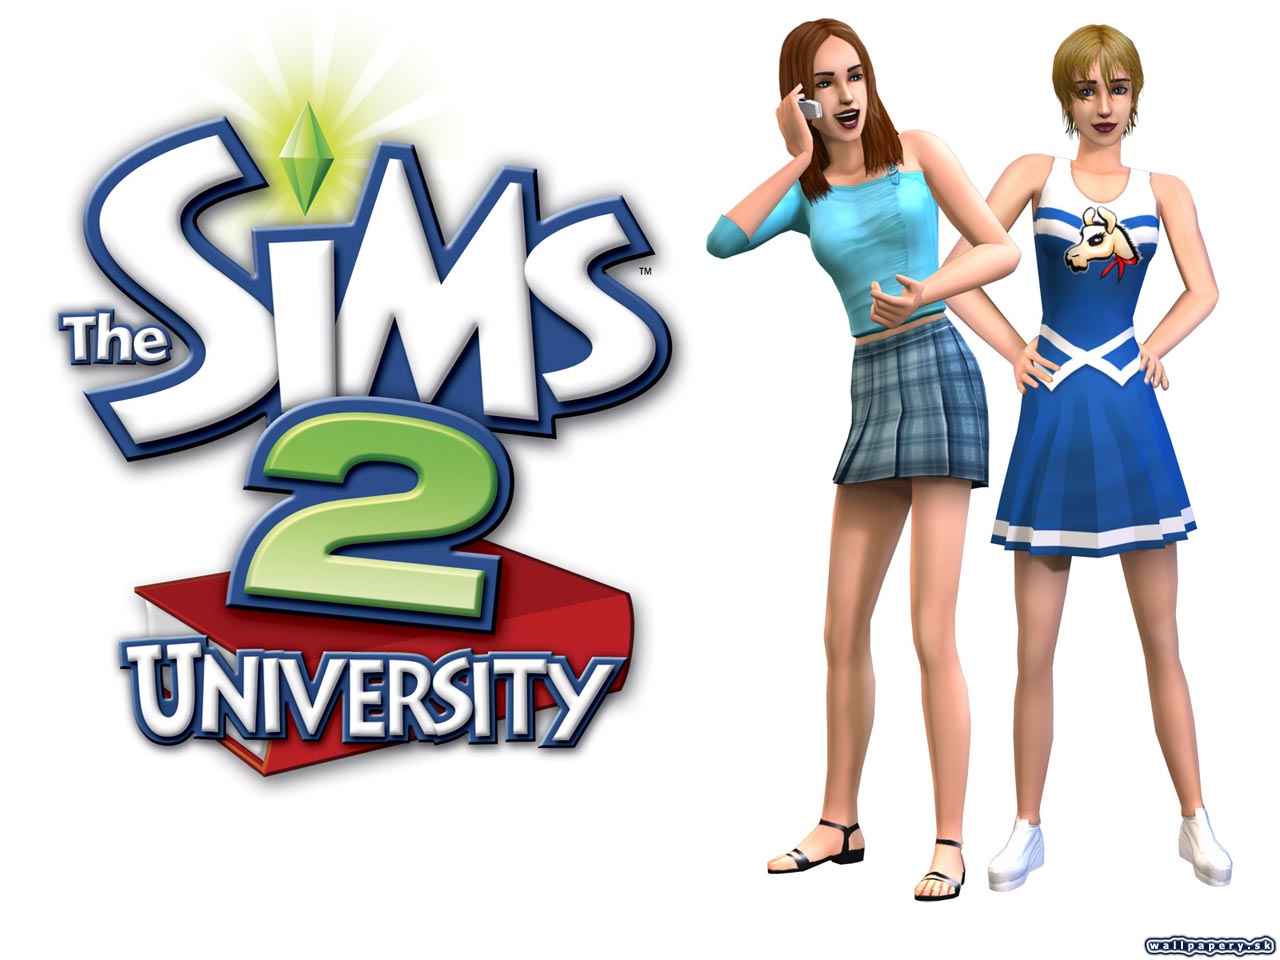 Sims university. The SIMS 2: университет. Симс 2 University. SIM. The SIMS 2 русская версия.